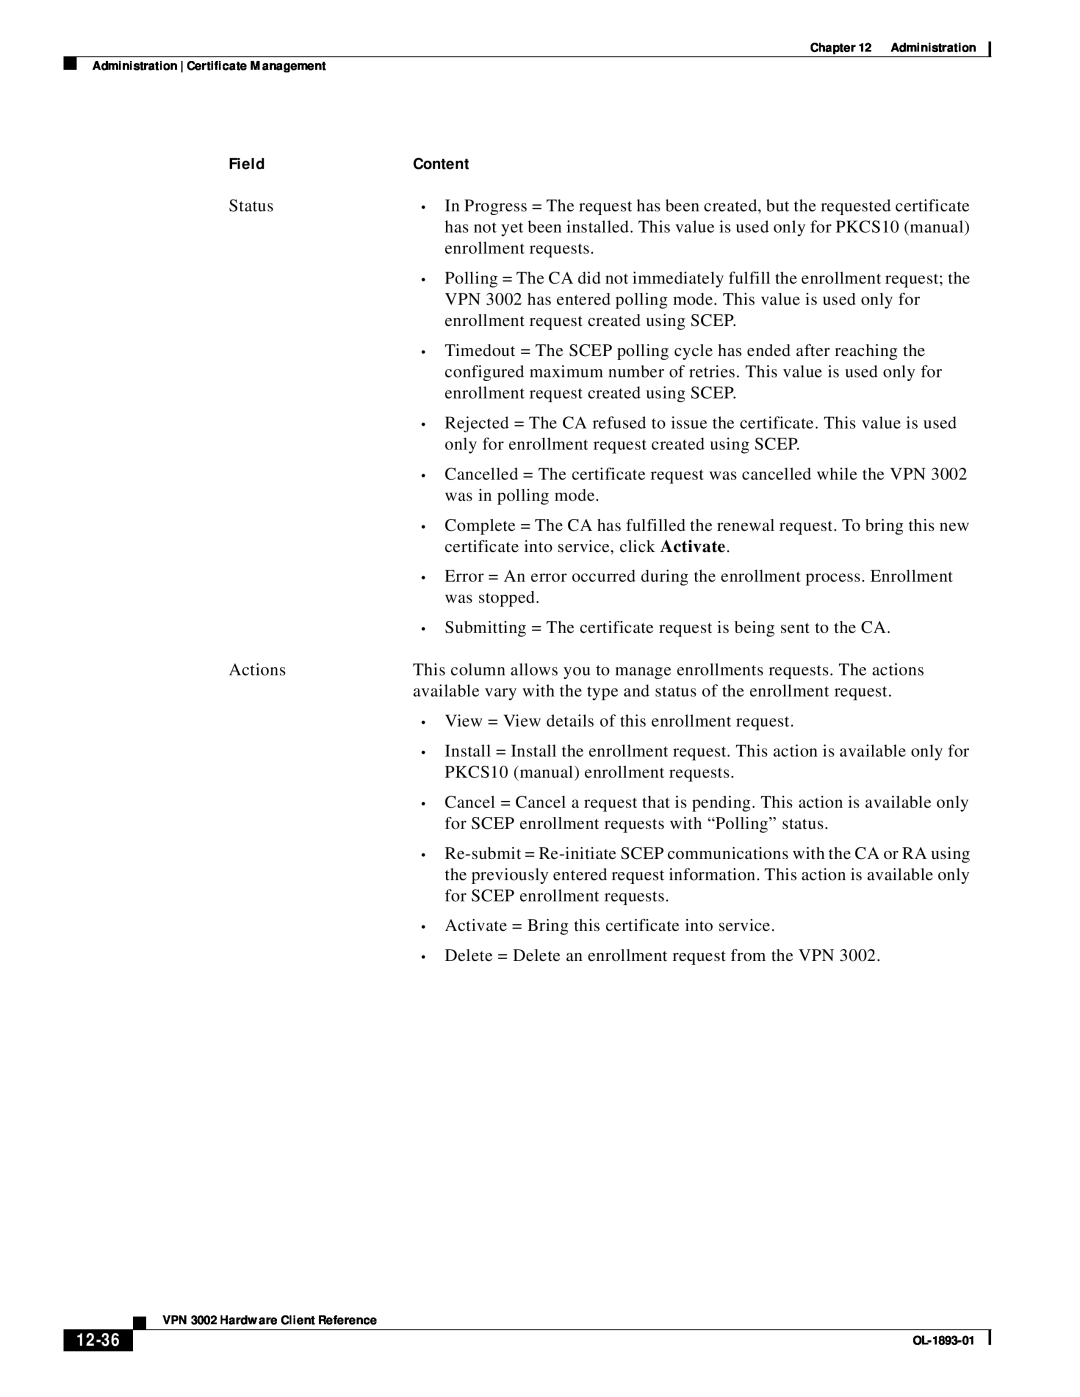 Cisco Systems VPN 3002 manual 12-36, Field, Content, Status 